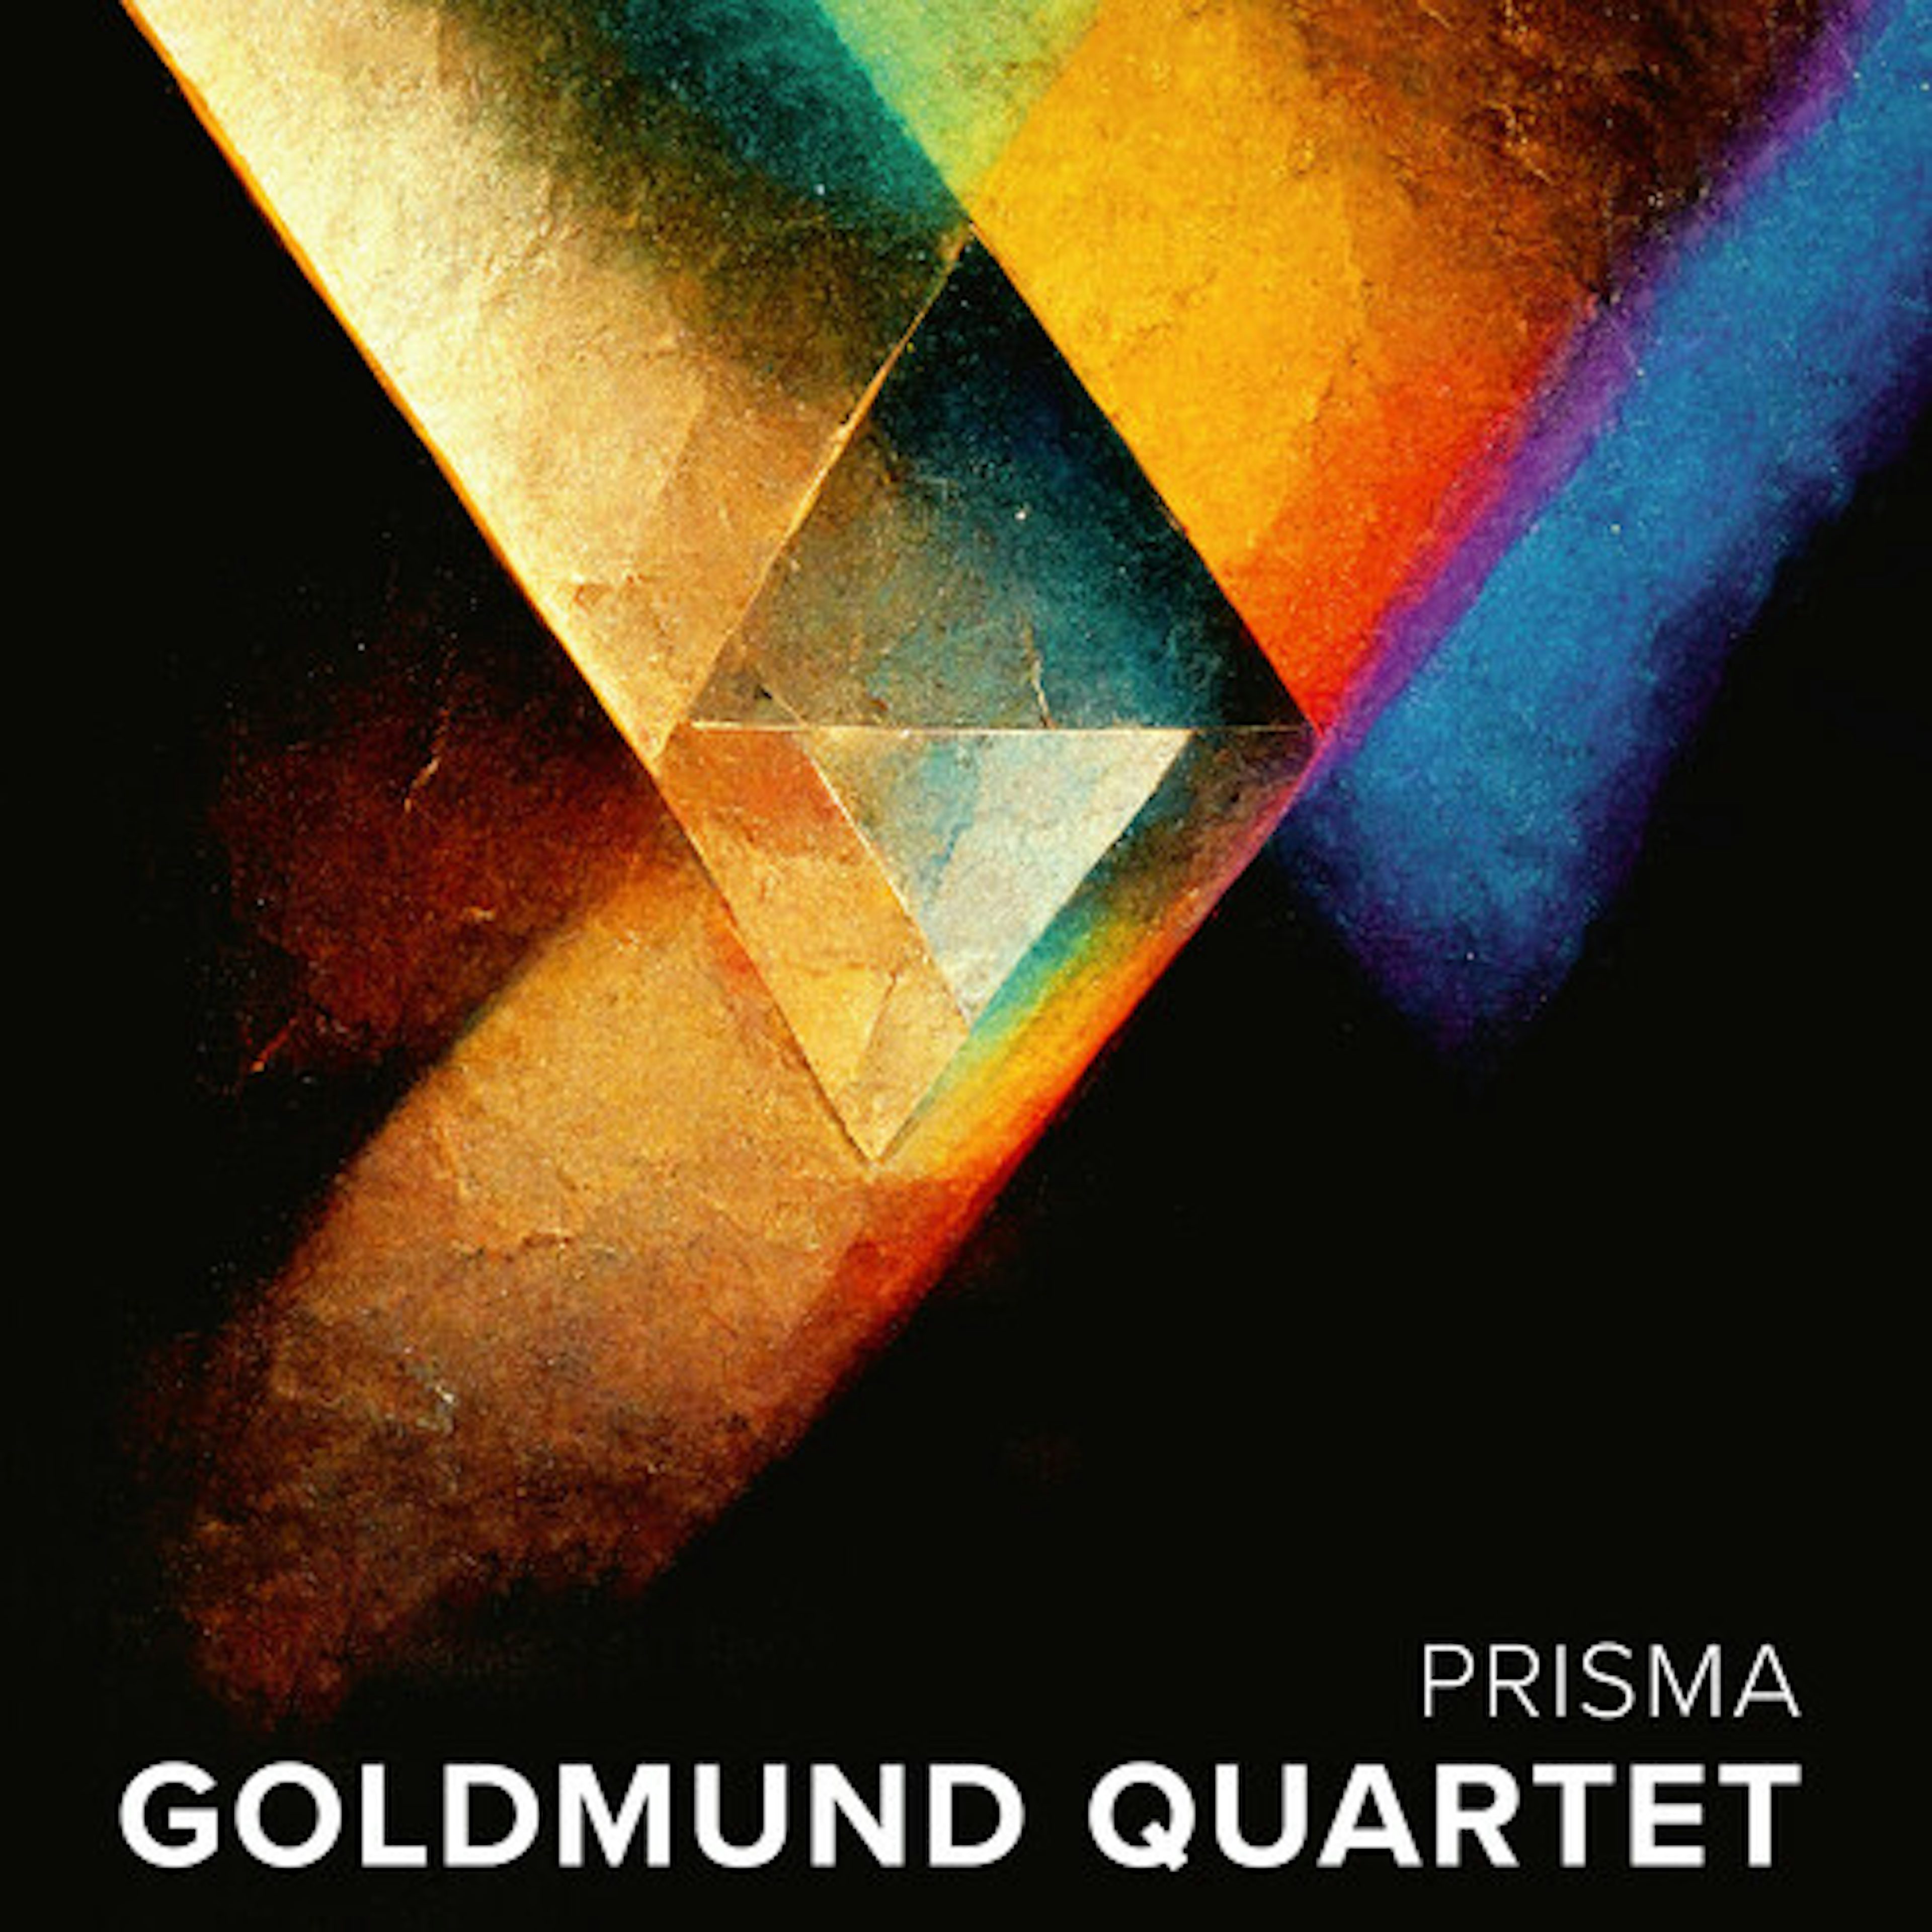 Glass / Helmersson / Goldmund Quartet PRISMA Vinyl Record